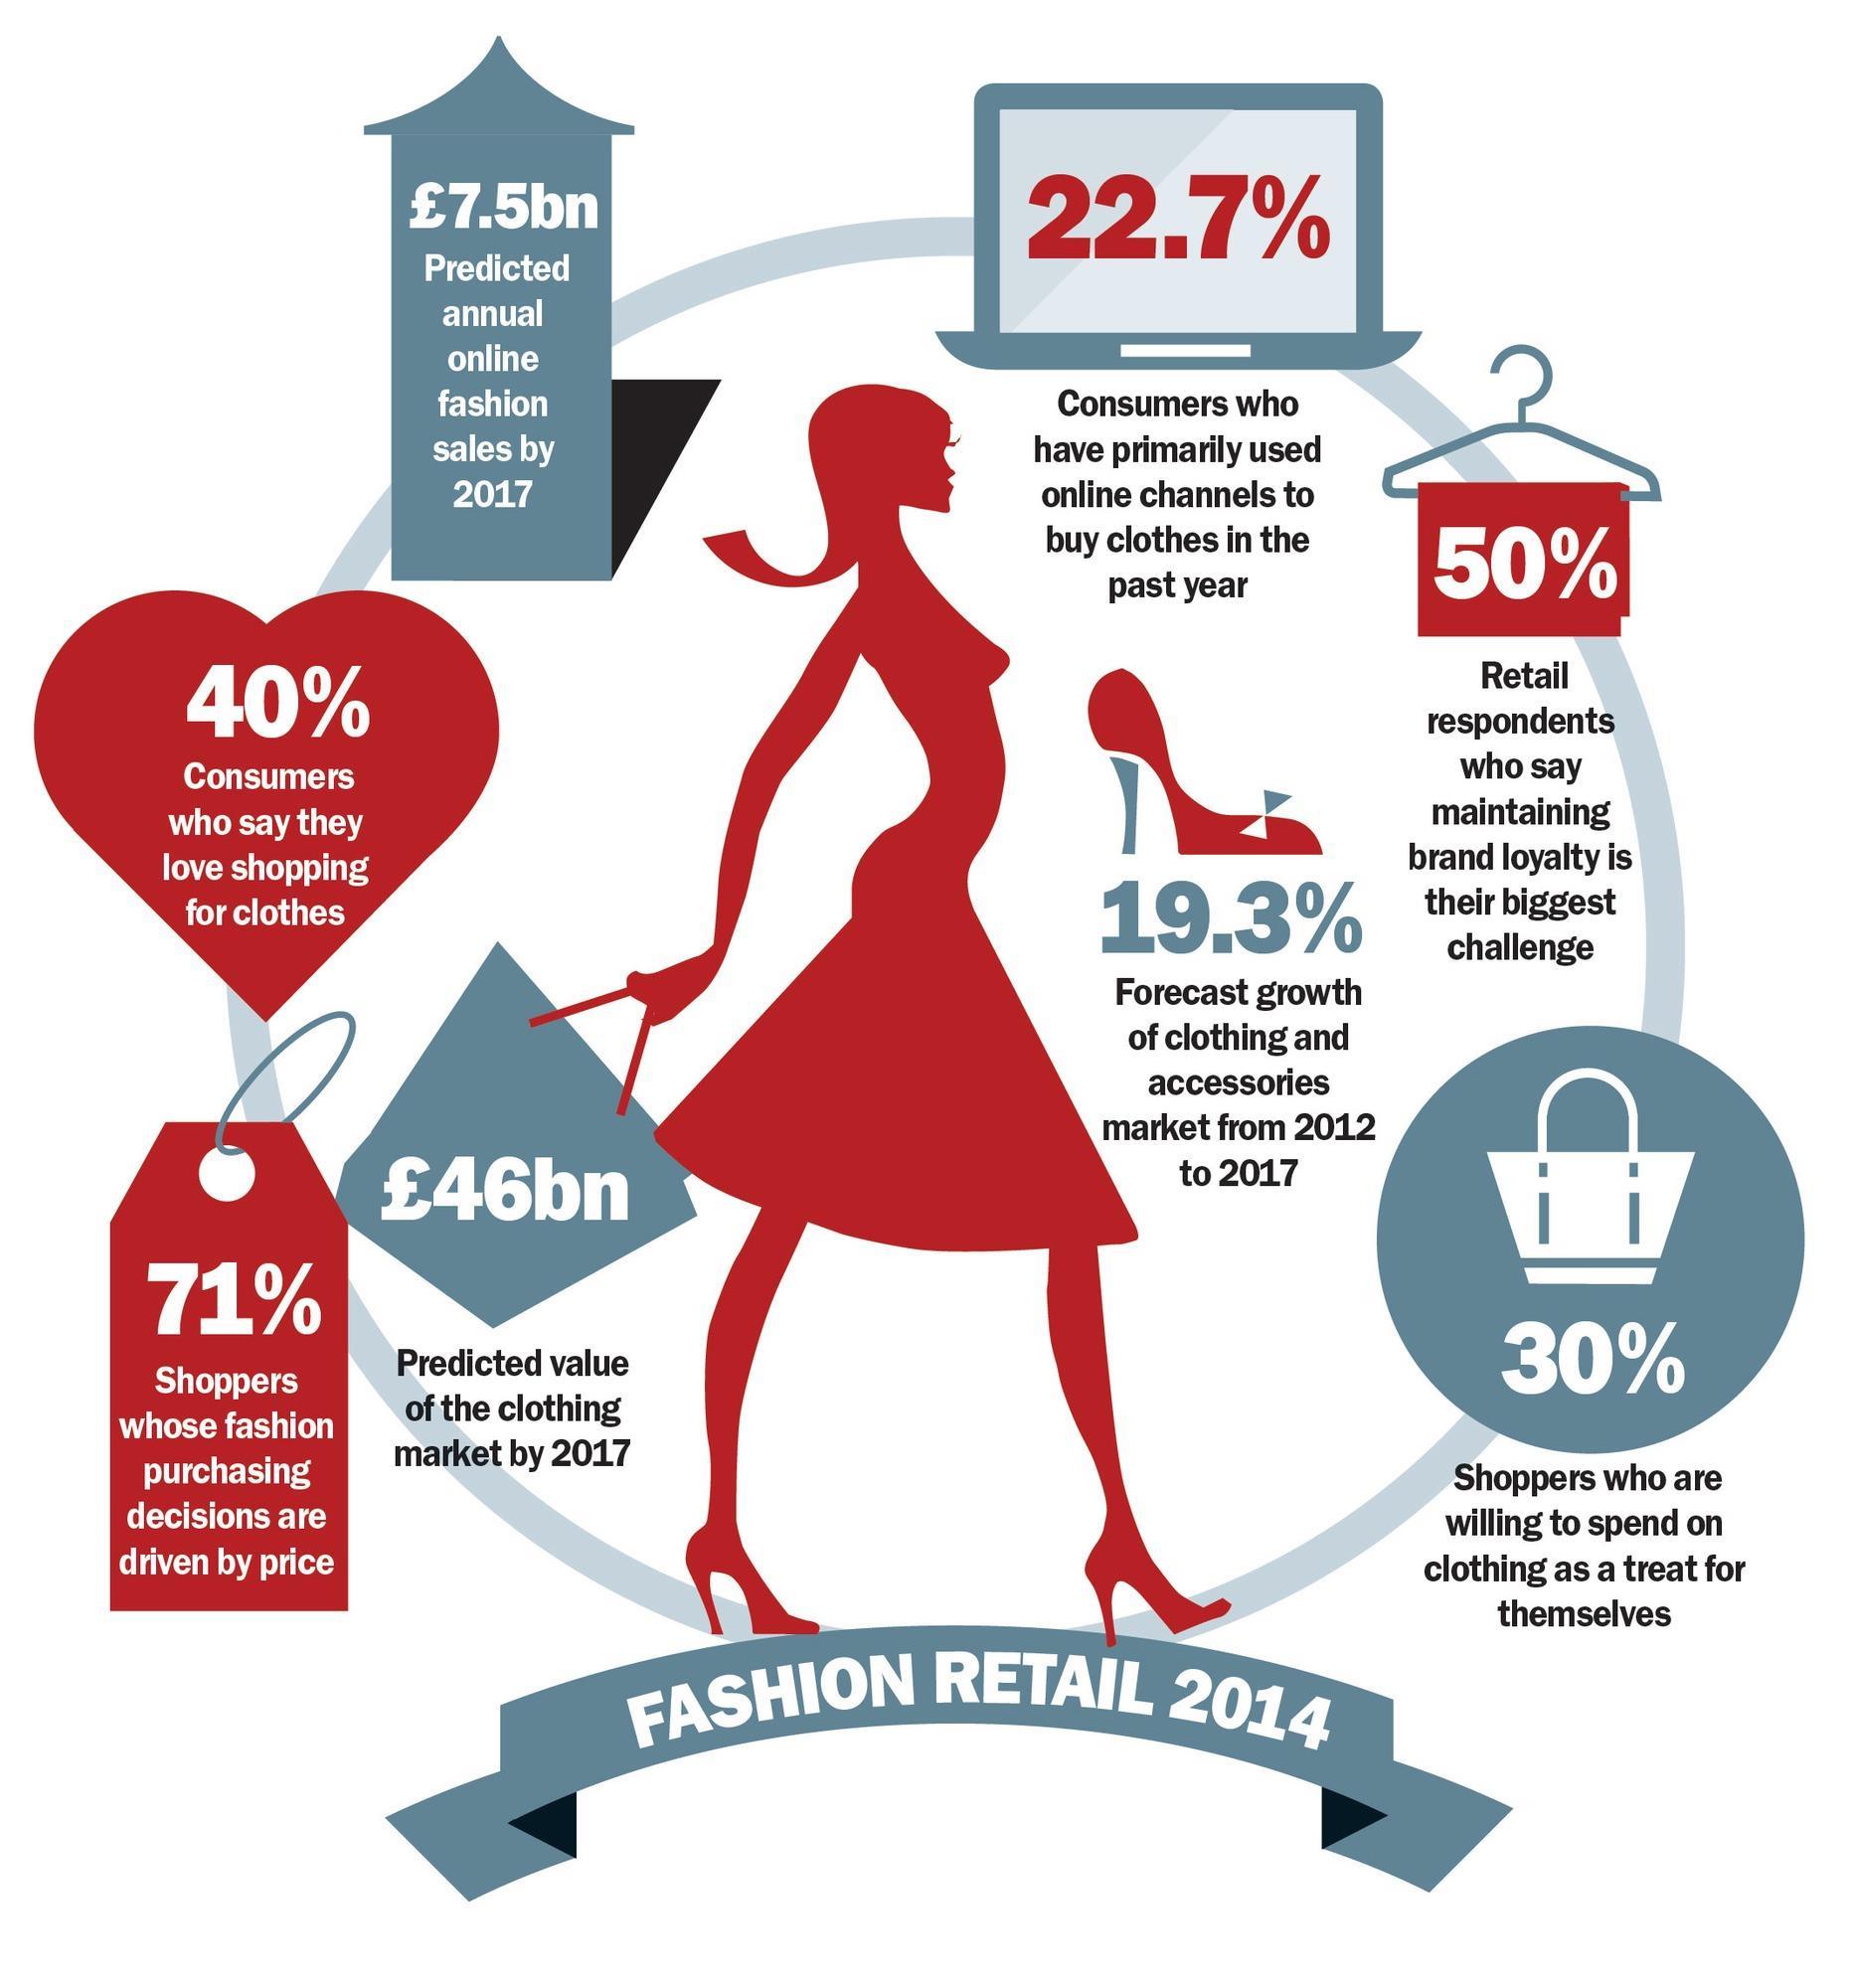 fashion marketing research topics